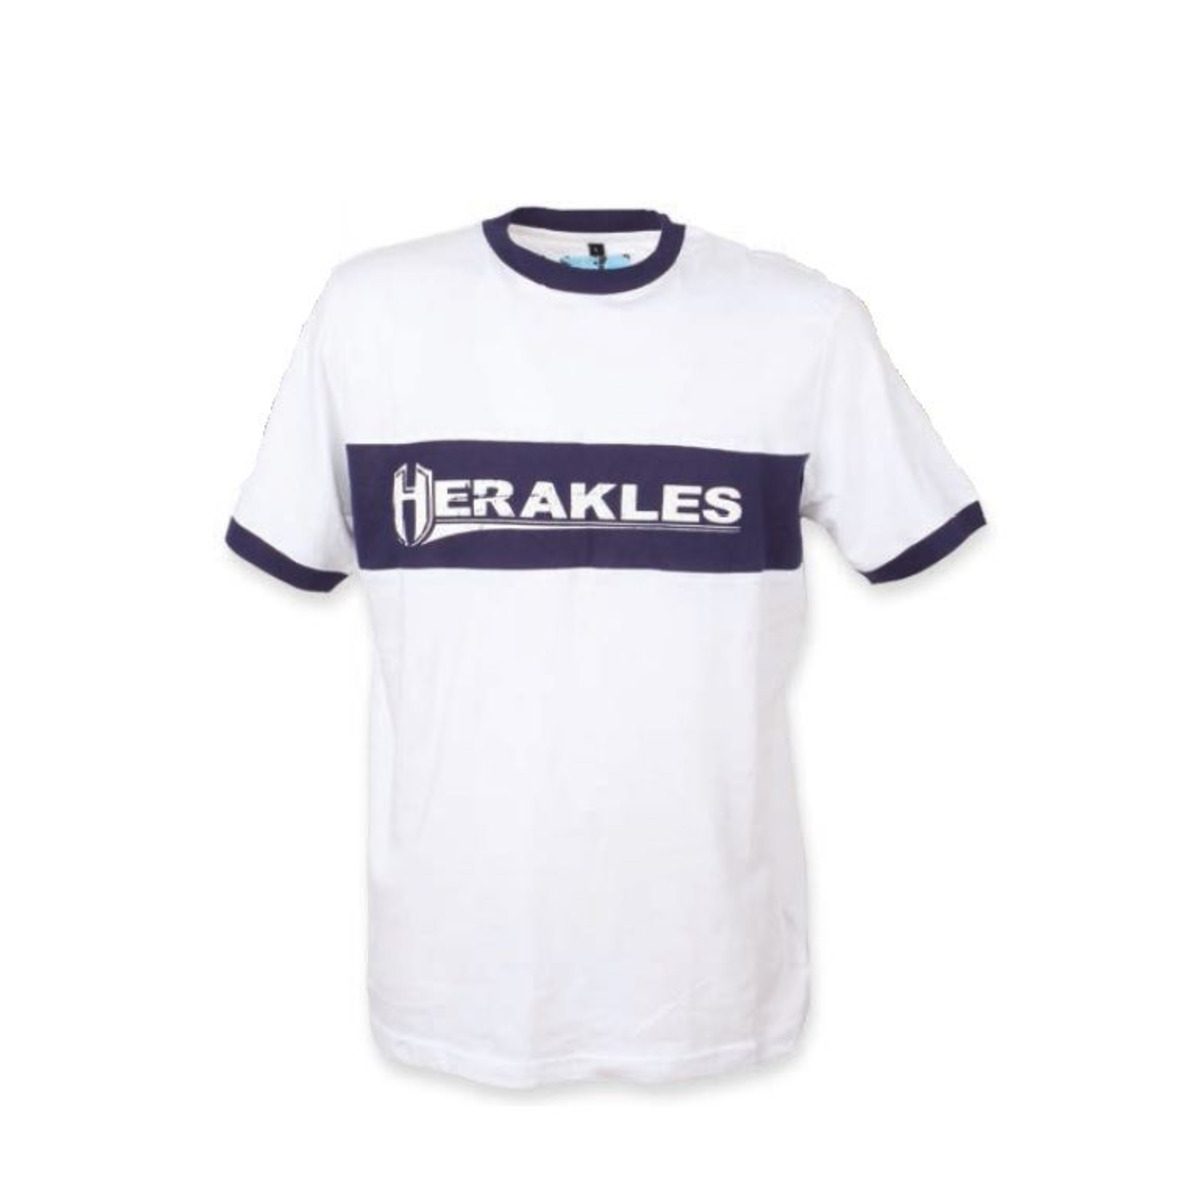 Herakles T-Shirt Weiß-Blau - 3XL